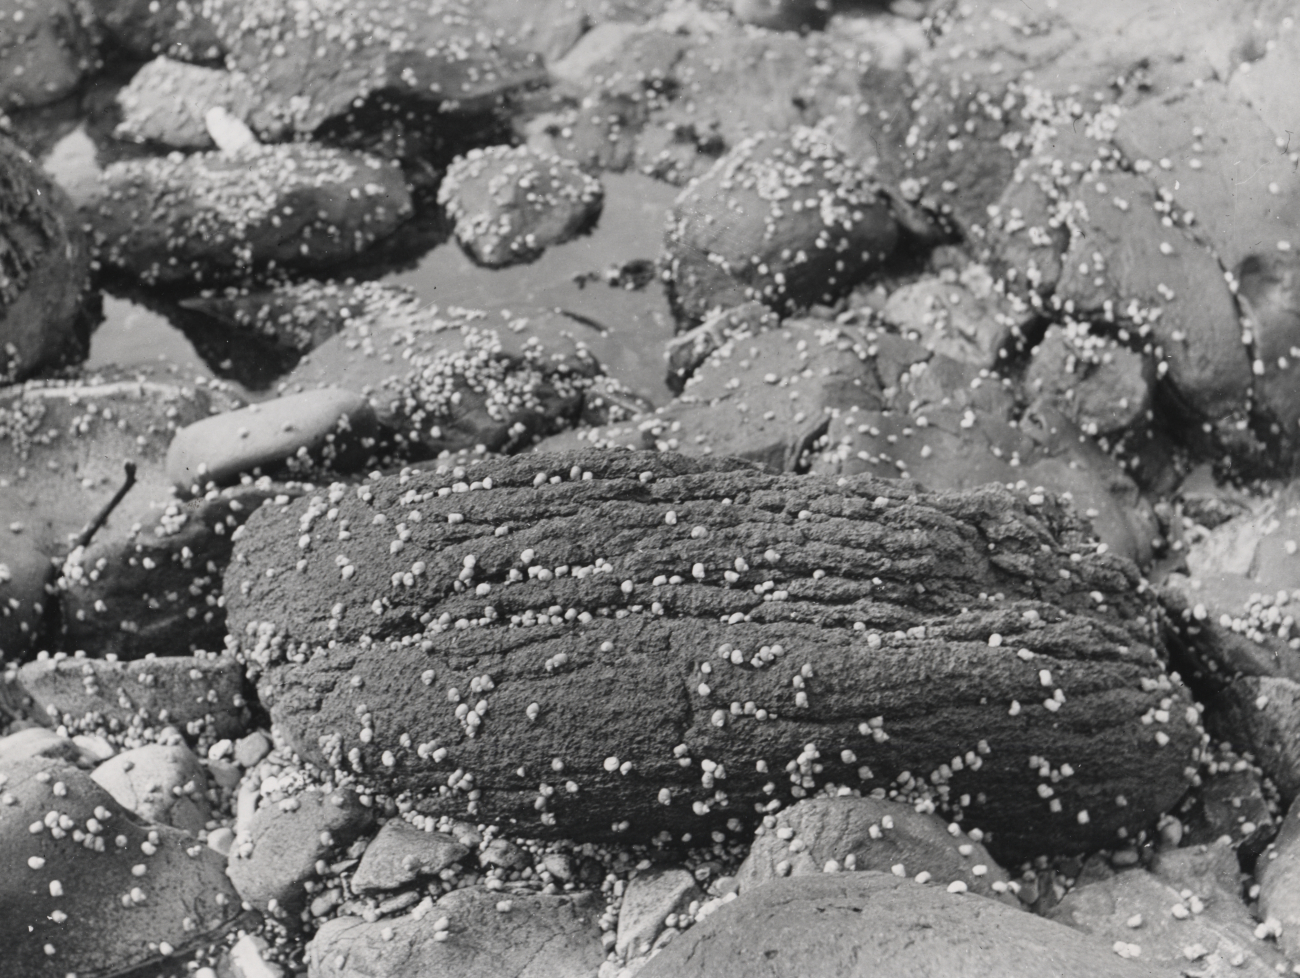 Snails on rocks - one form of otter food